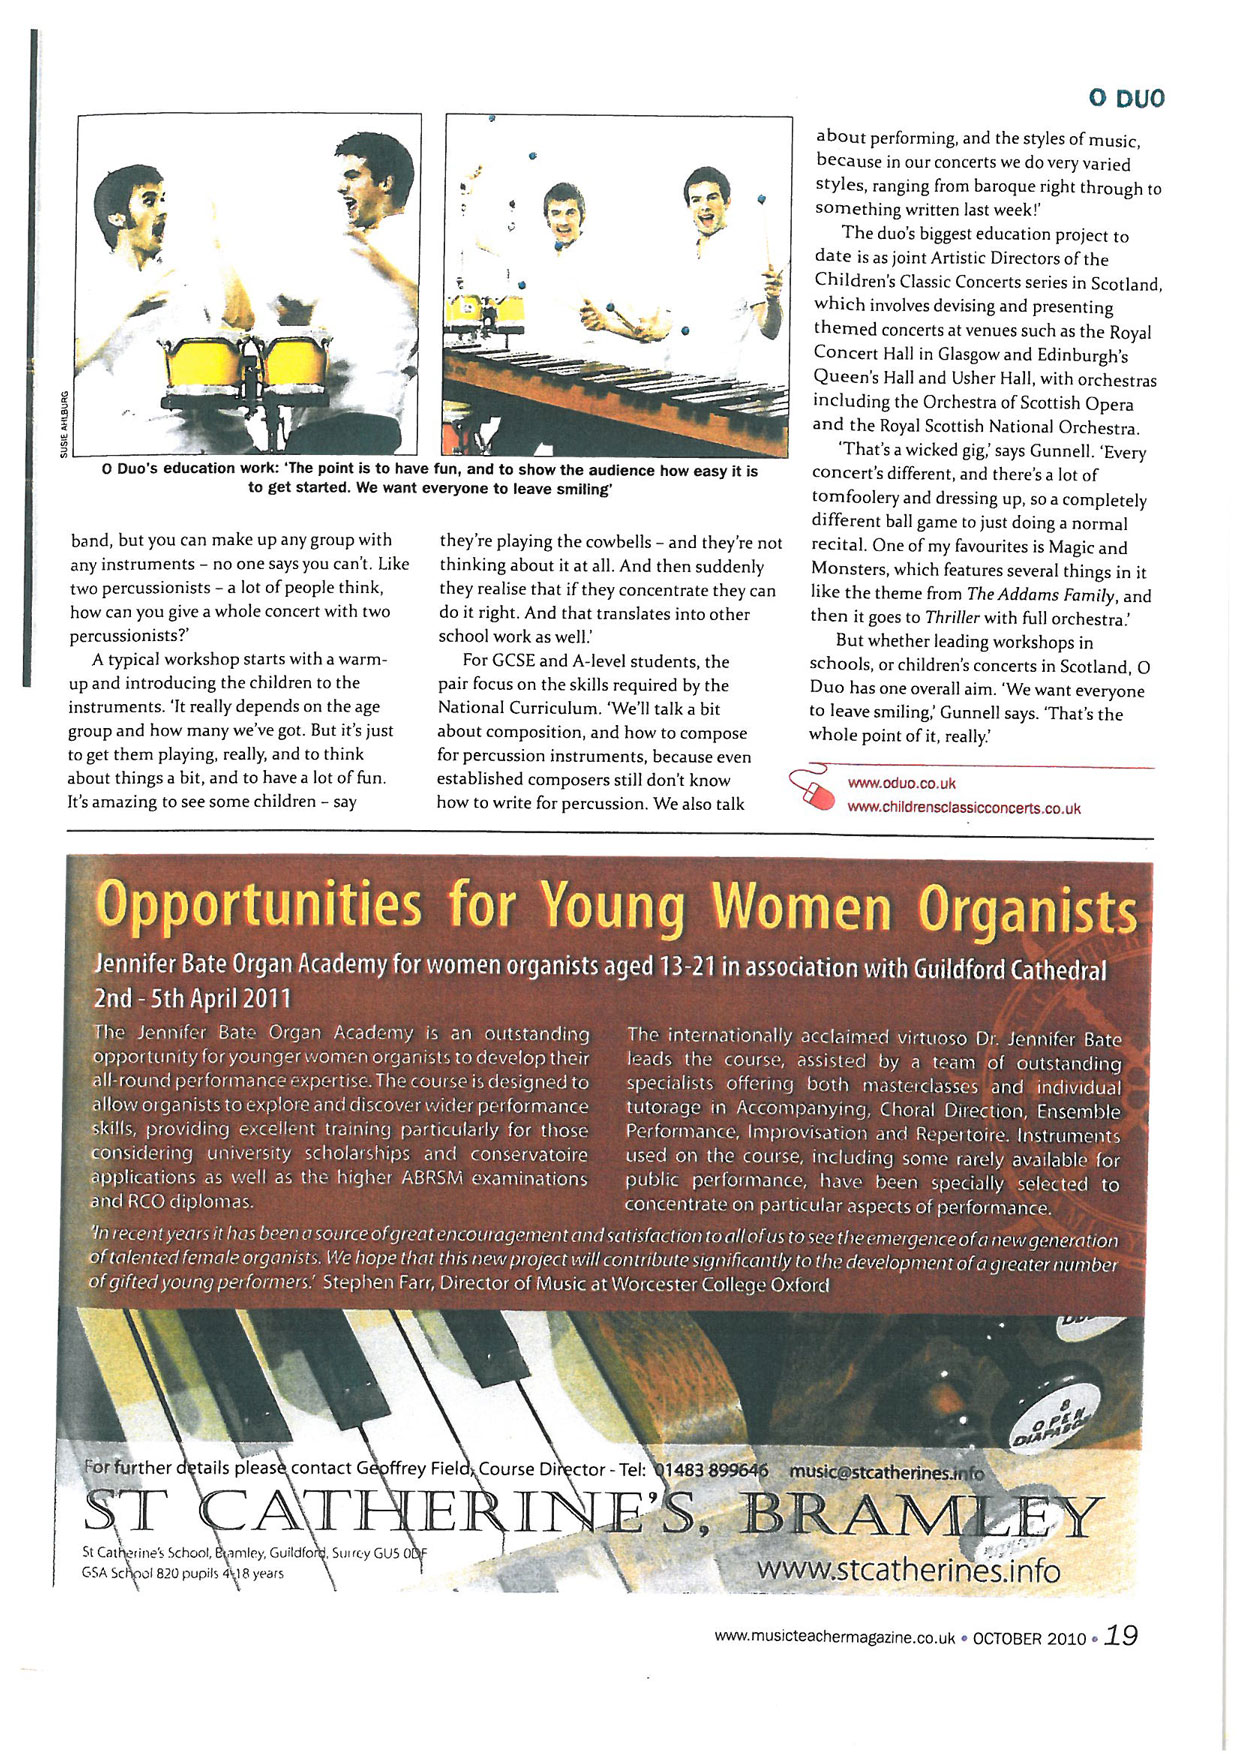 Article, 2010, Music Teacher Magazine, p3